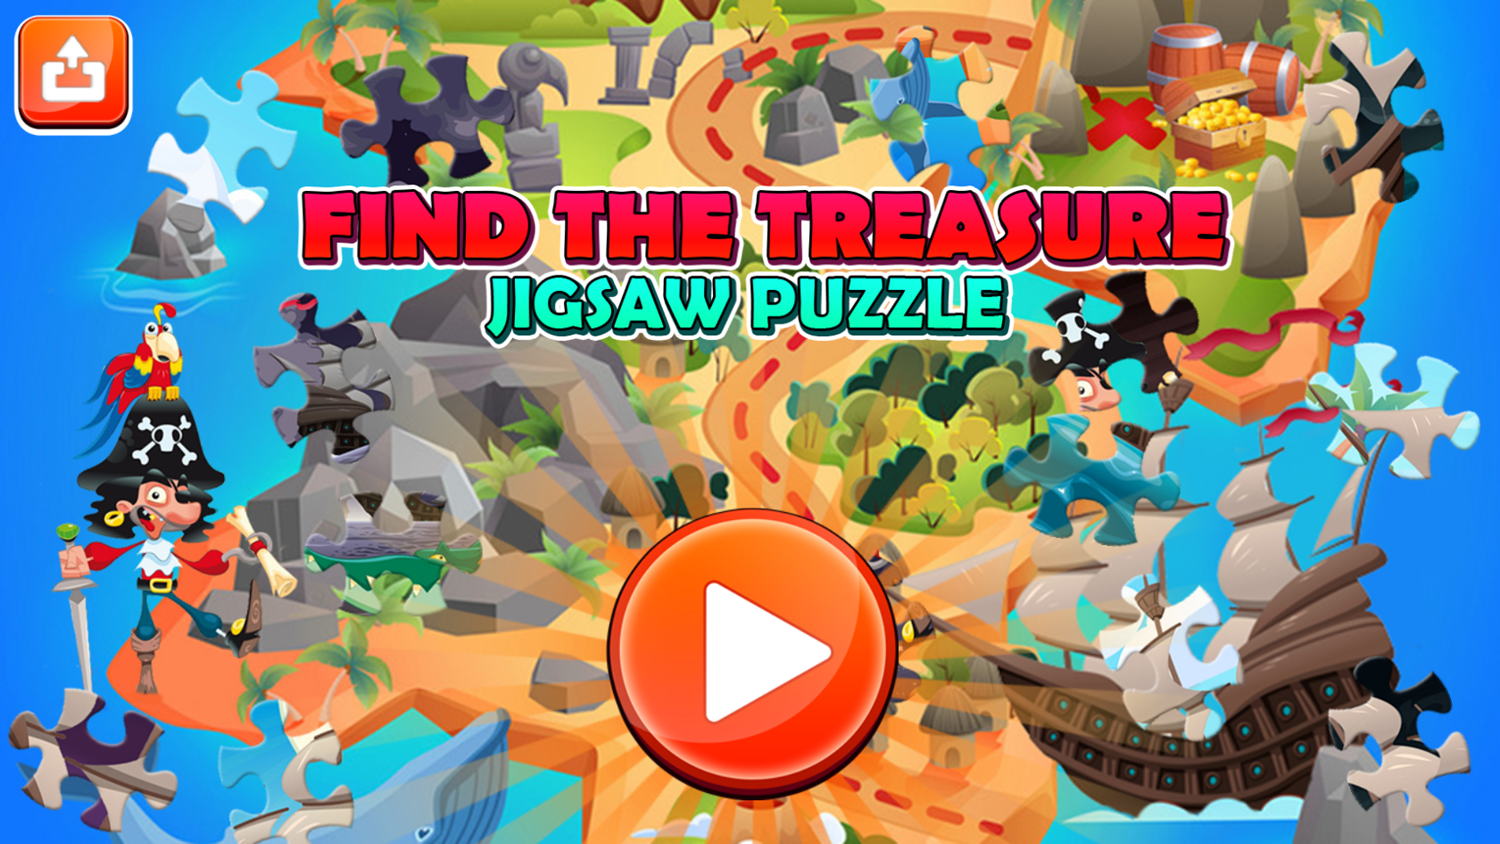 Find the Treasure Jigsaw Puzzle Game Welcome Screen Screenshot.